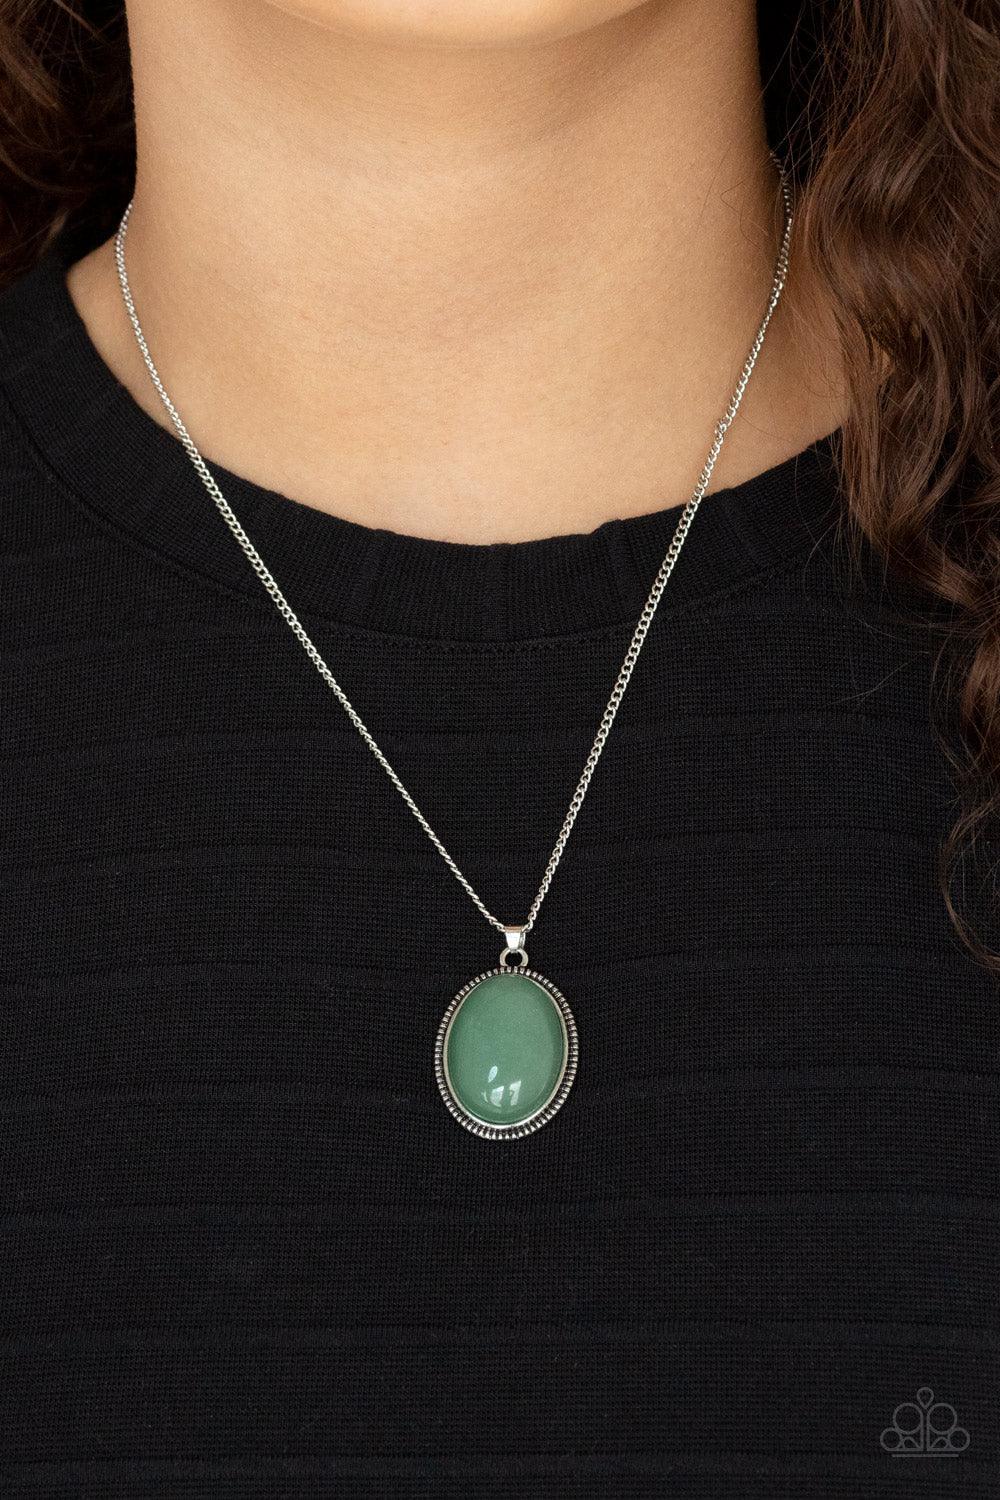 Tranquil Talisman Green Necklace - Jewelry by Bretta